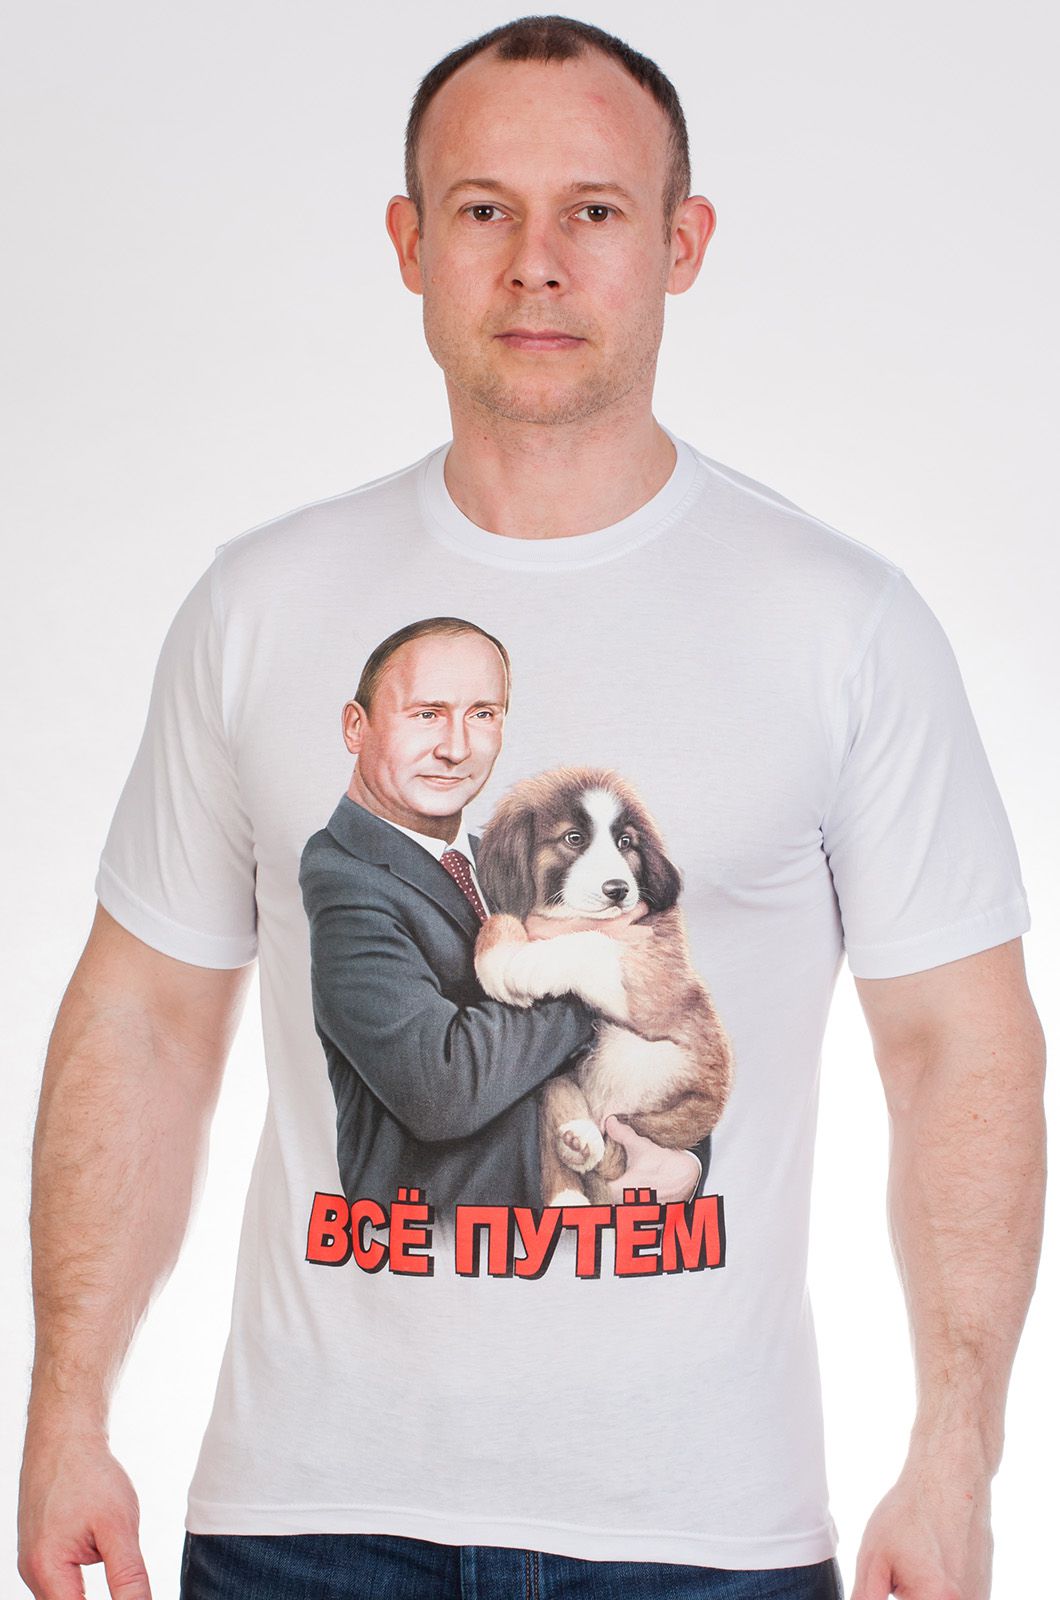 Путин его футболка